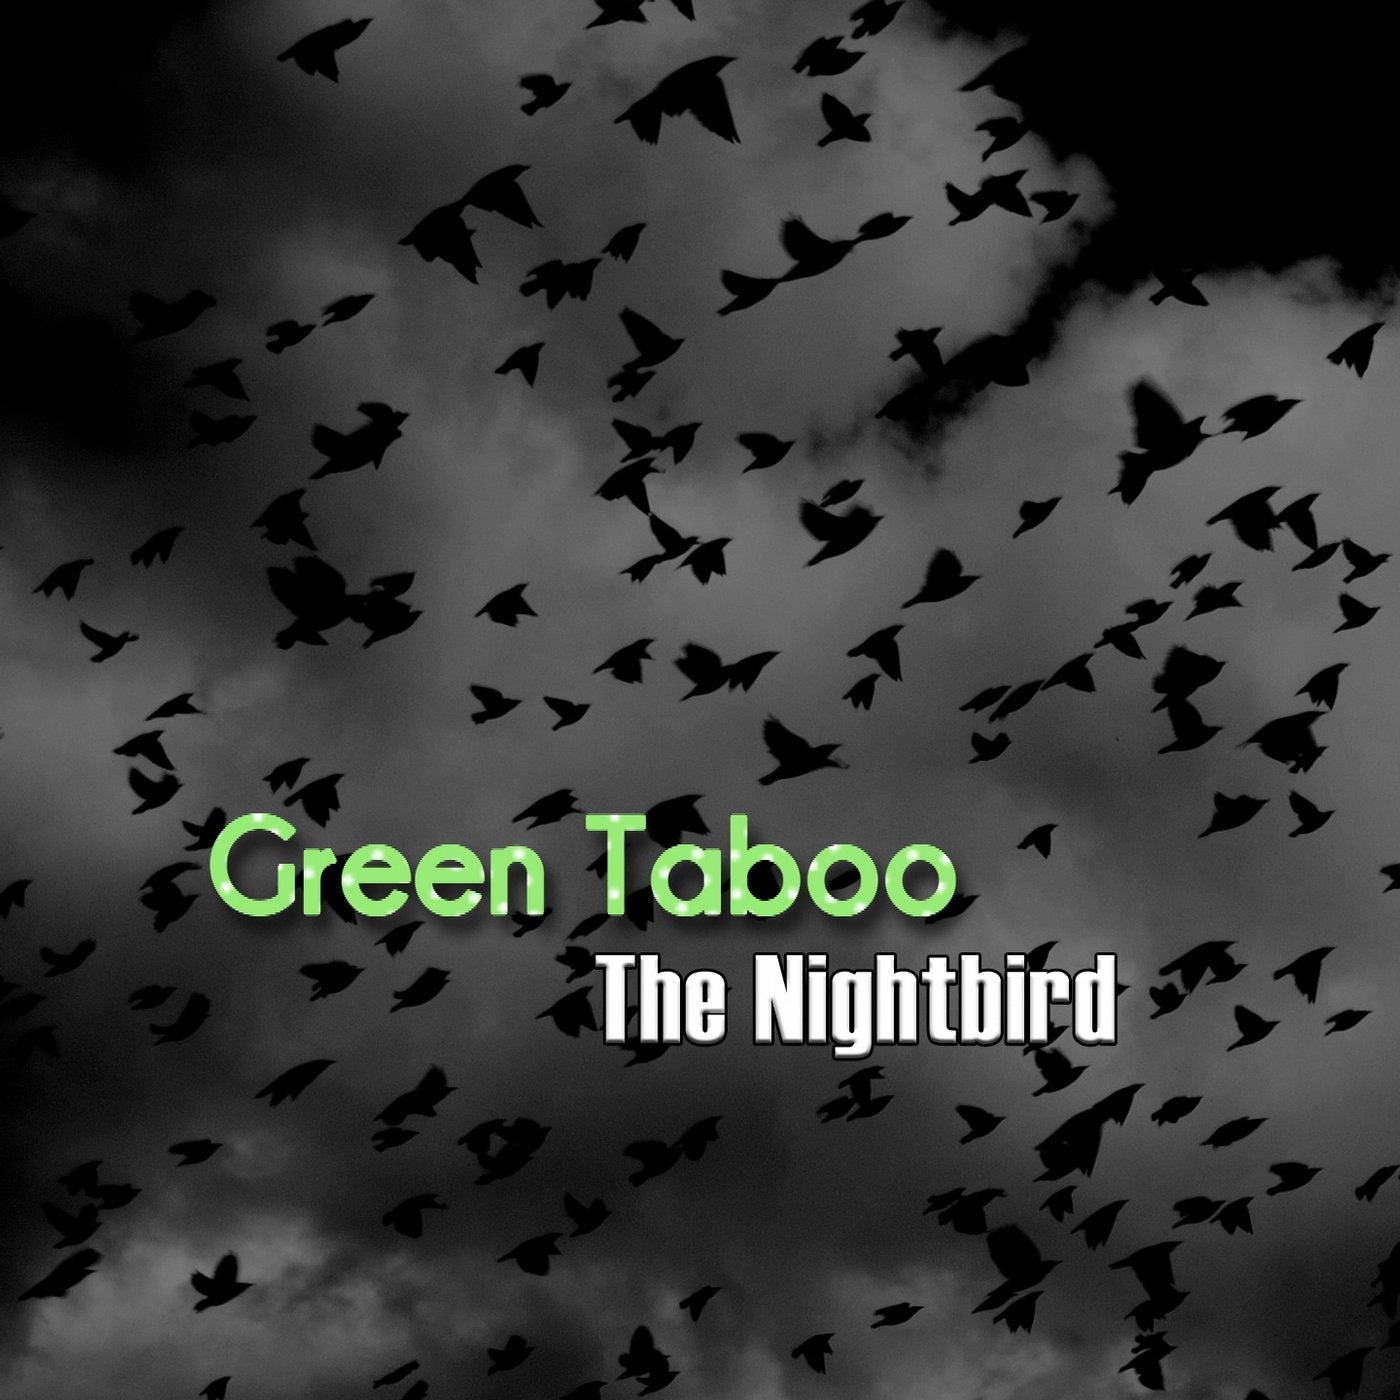 The Nightbird